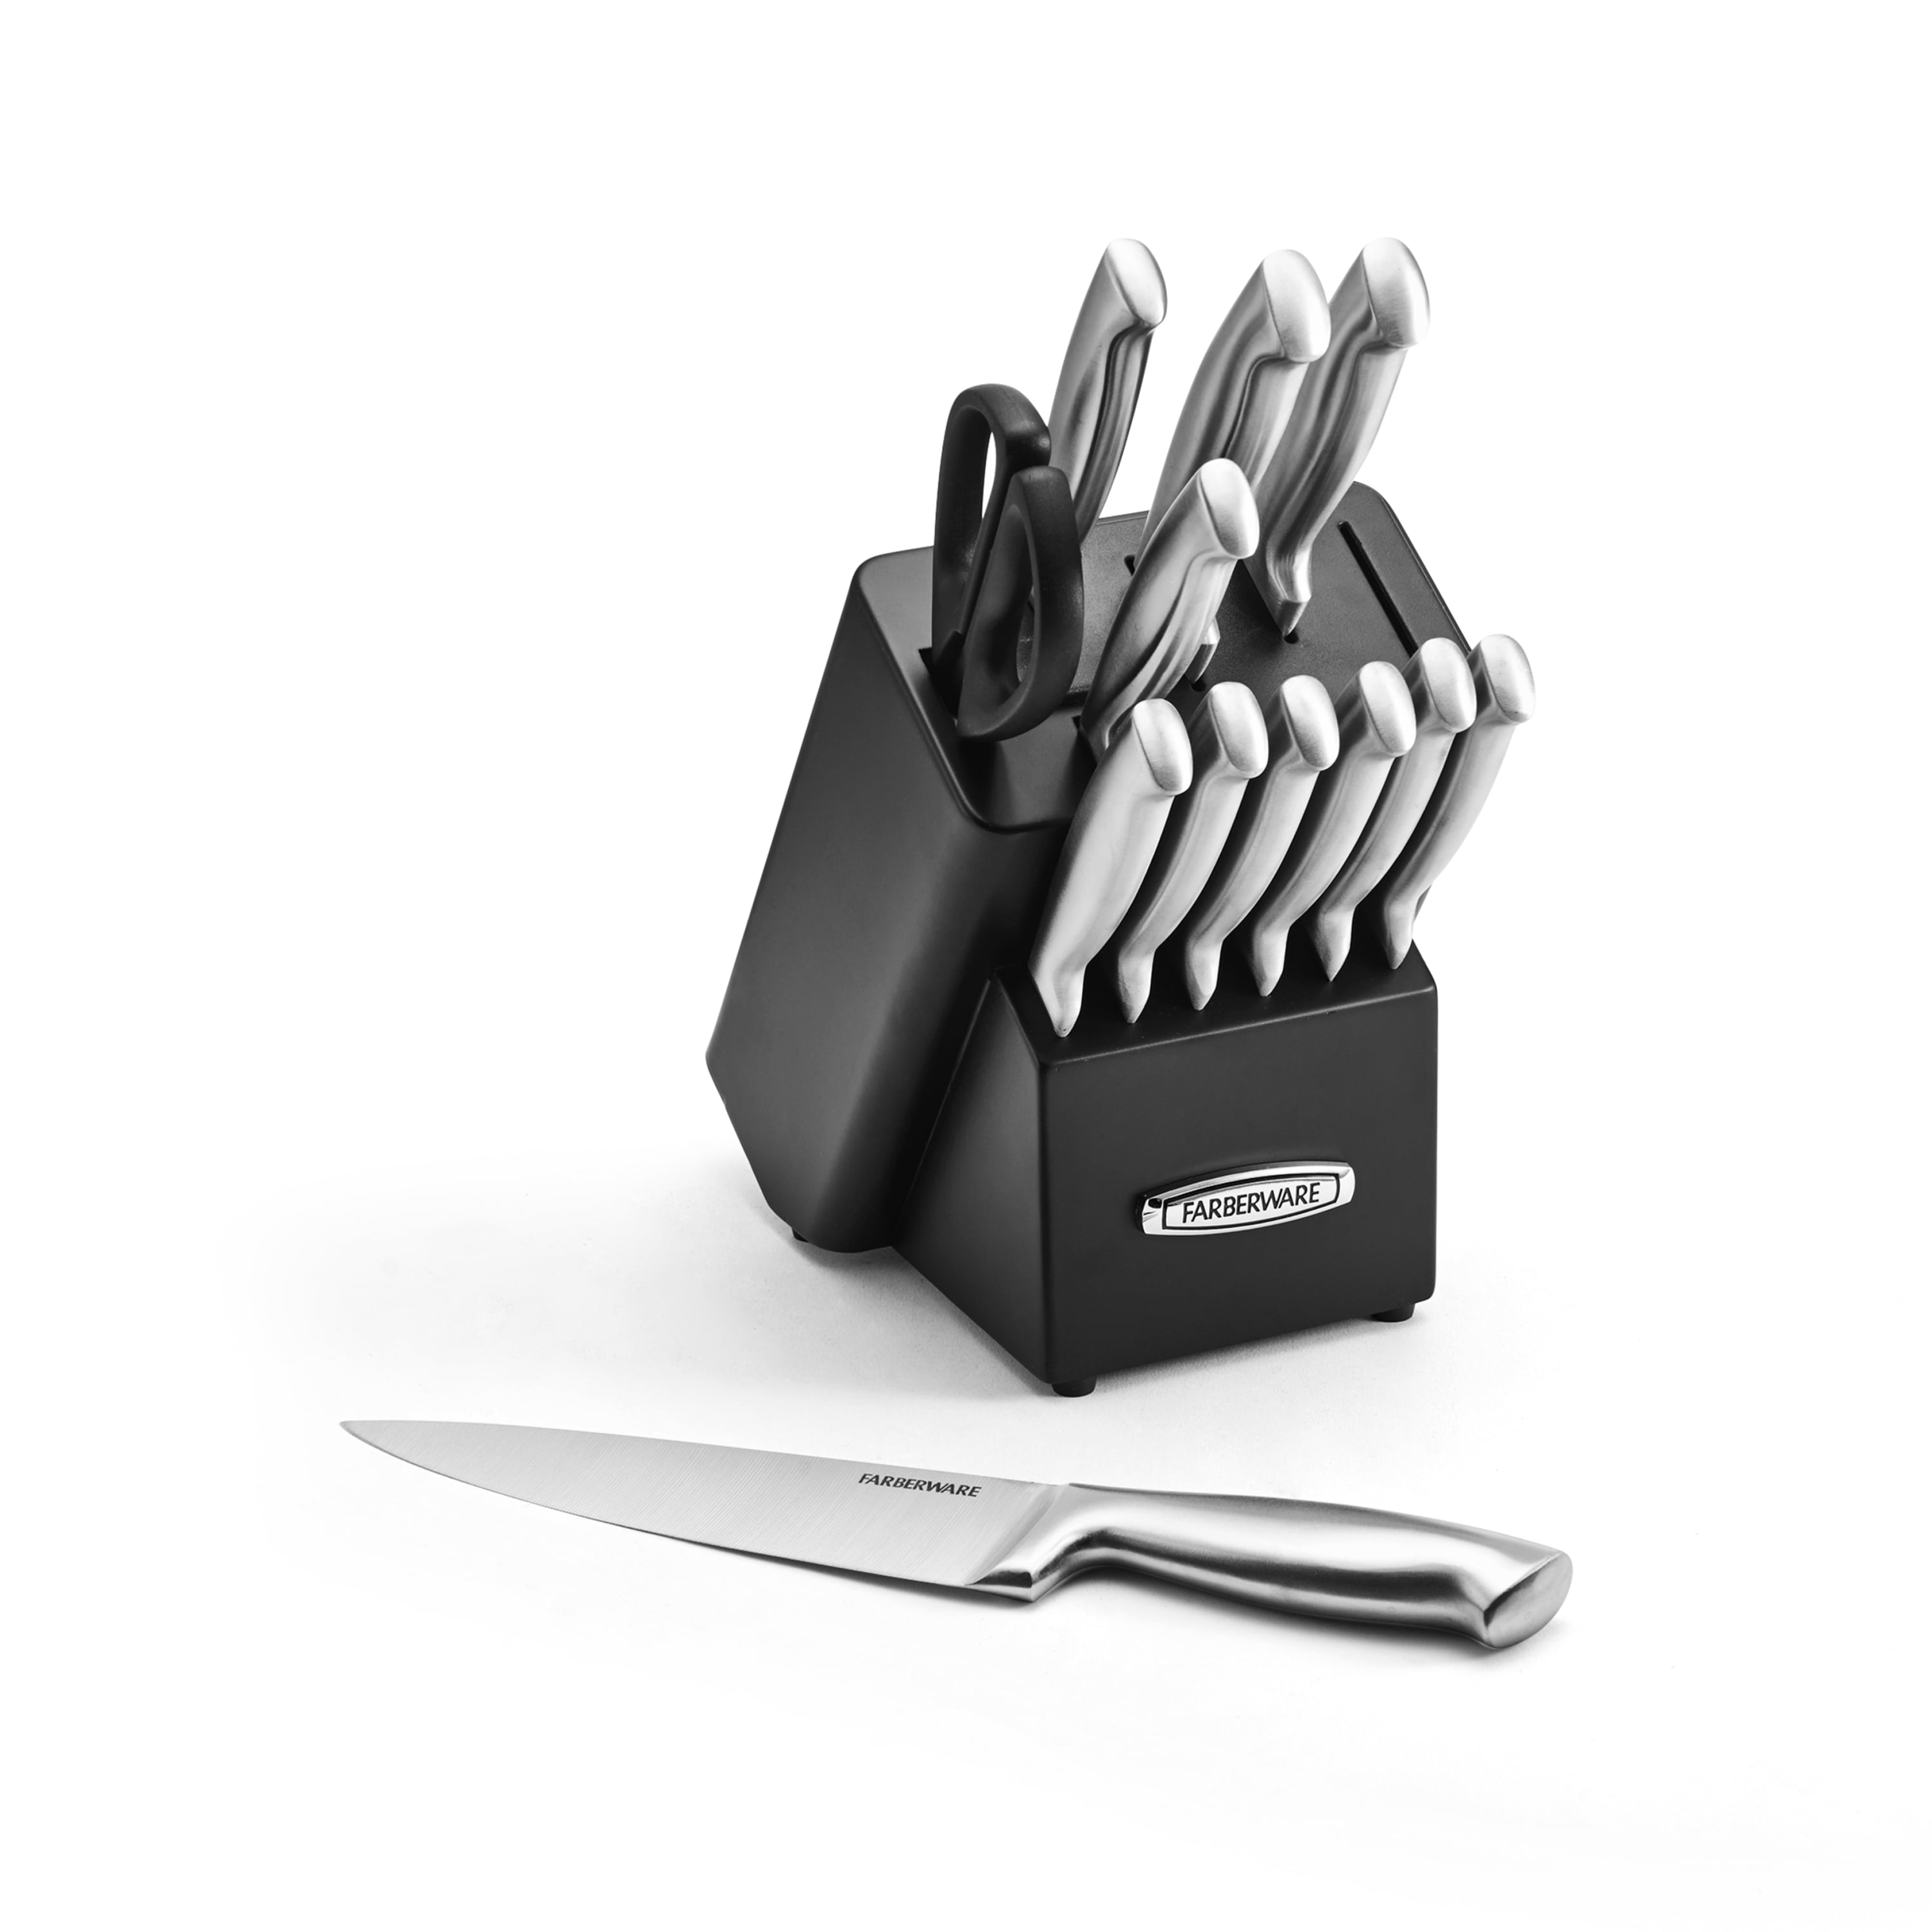 self sharpening knife set reviews